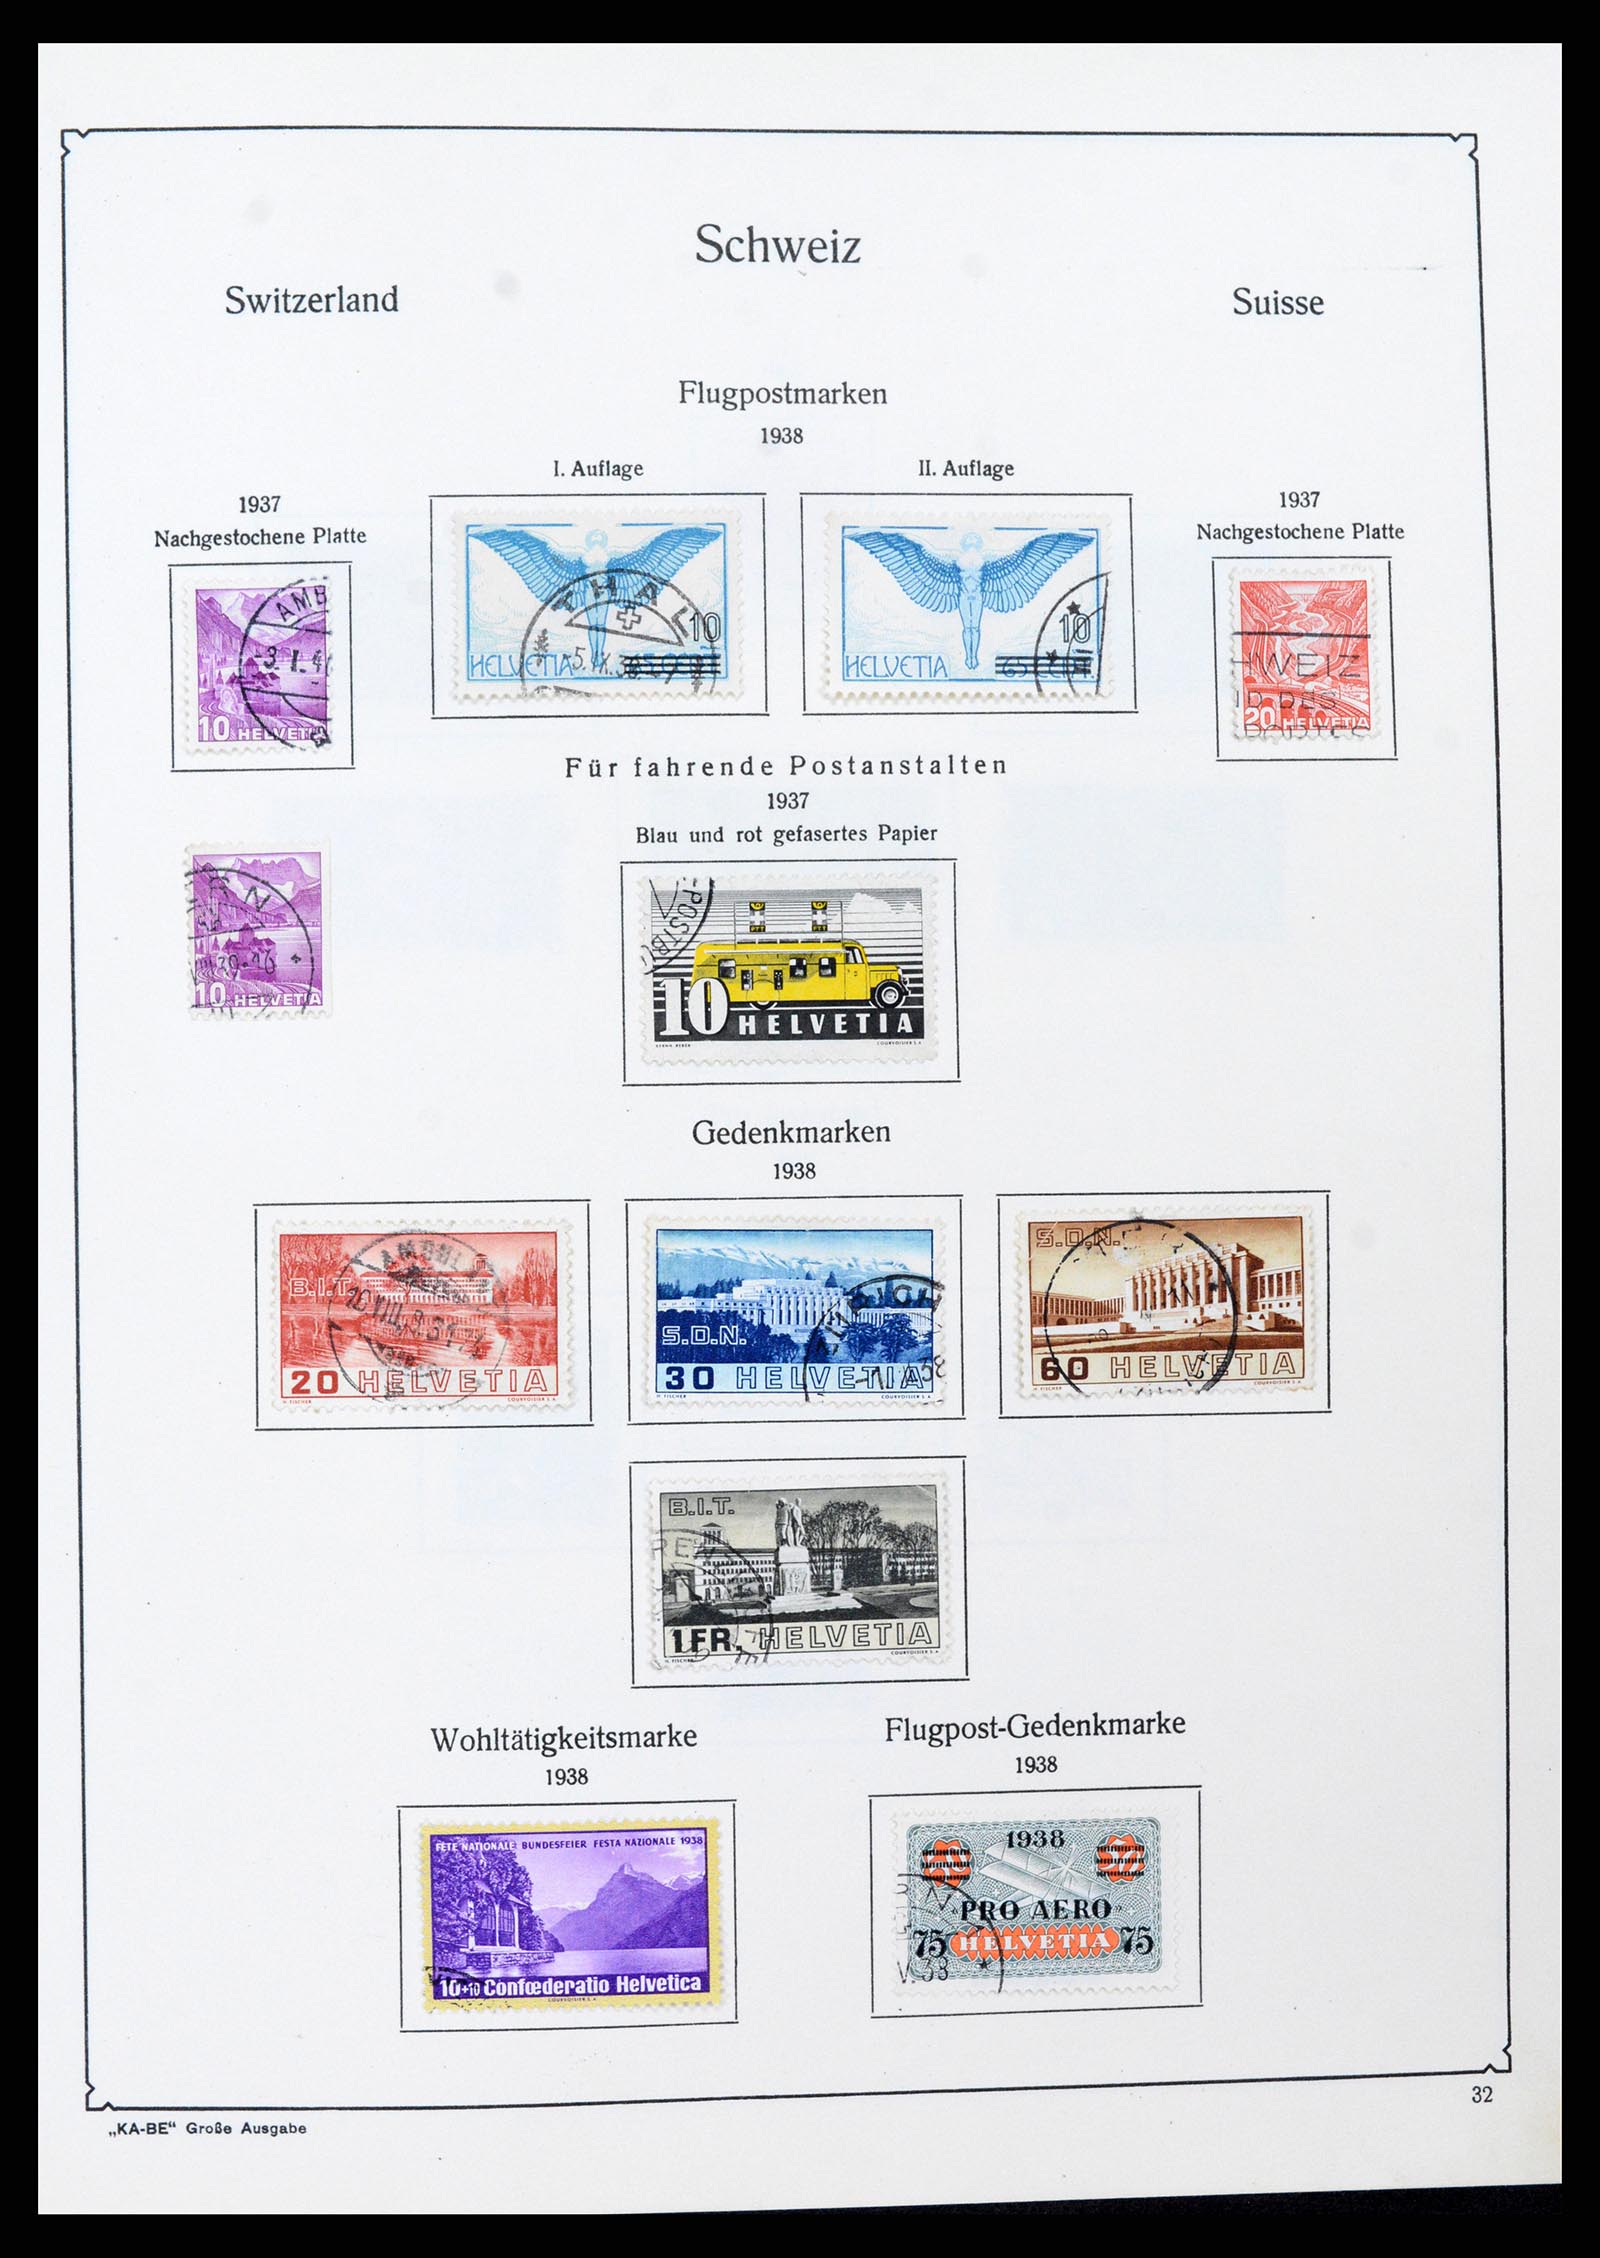 37588 031 - Stamp collection 37588 Switzerland 1854-1974.